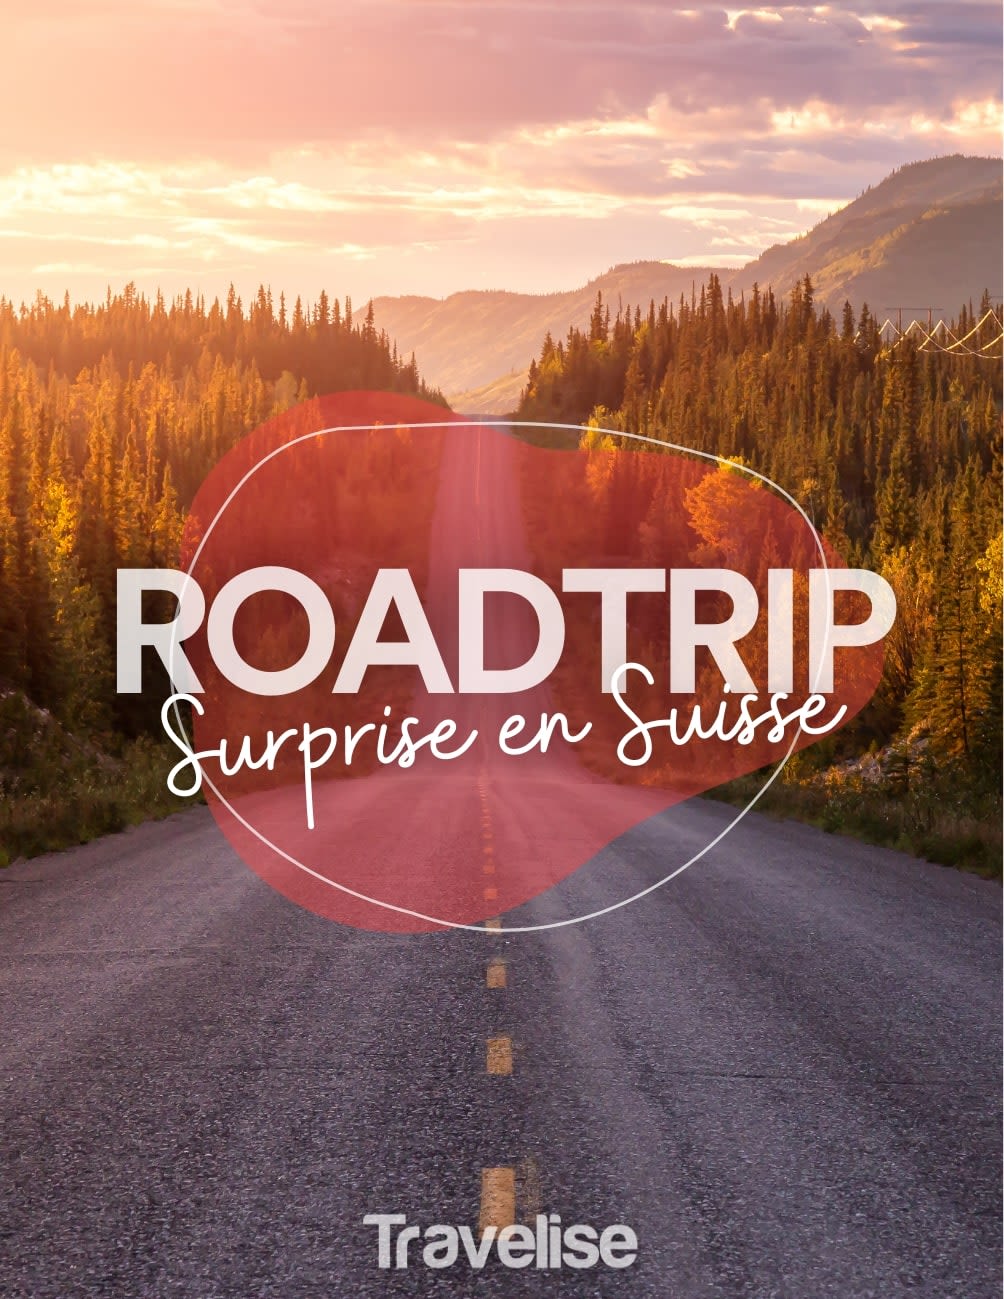 One-day Surprise Roadtrip